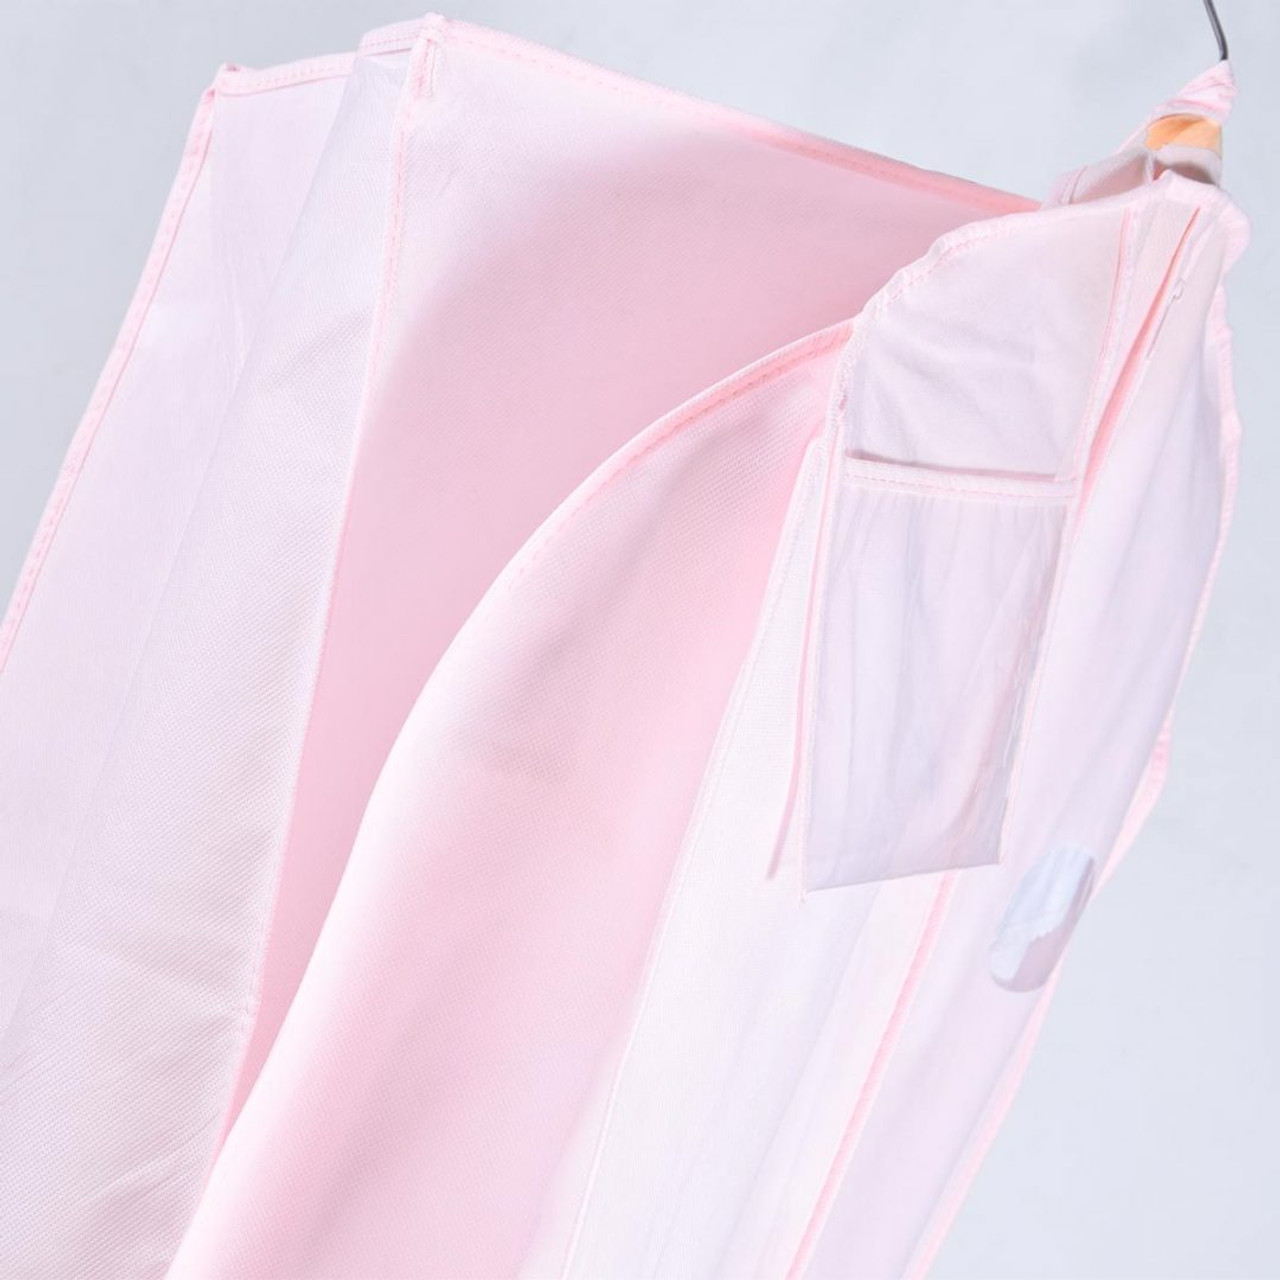 24"x10"x72" Fabtex Cloth Bridal Bag-Pink with gusset unprinted - ea.